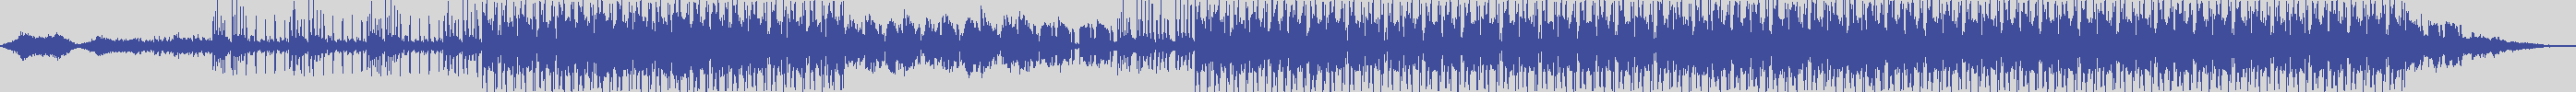 noclouds_chillout [NOC021] Casablanca - Damping [Original Mix] audio wave form